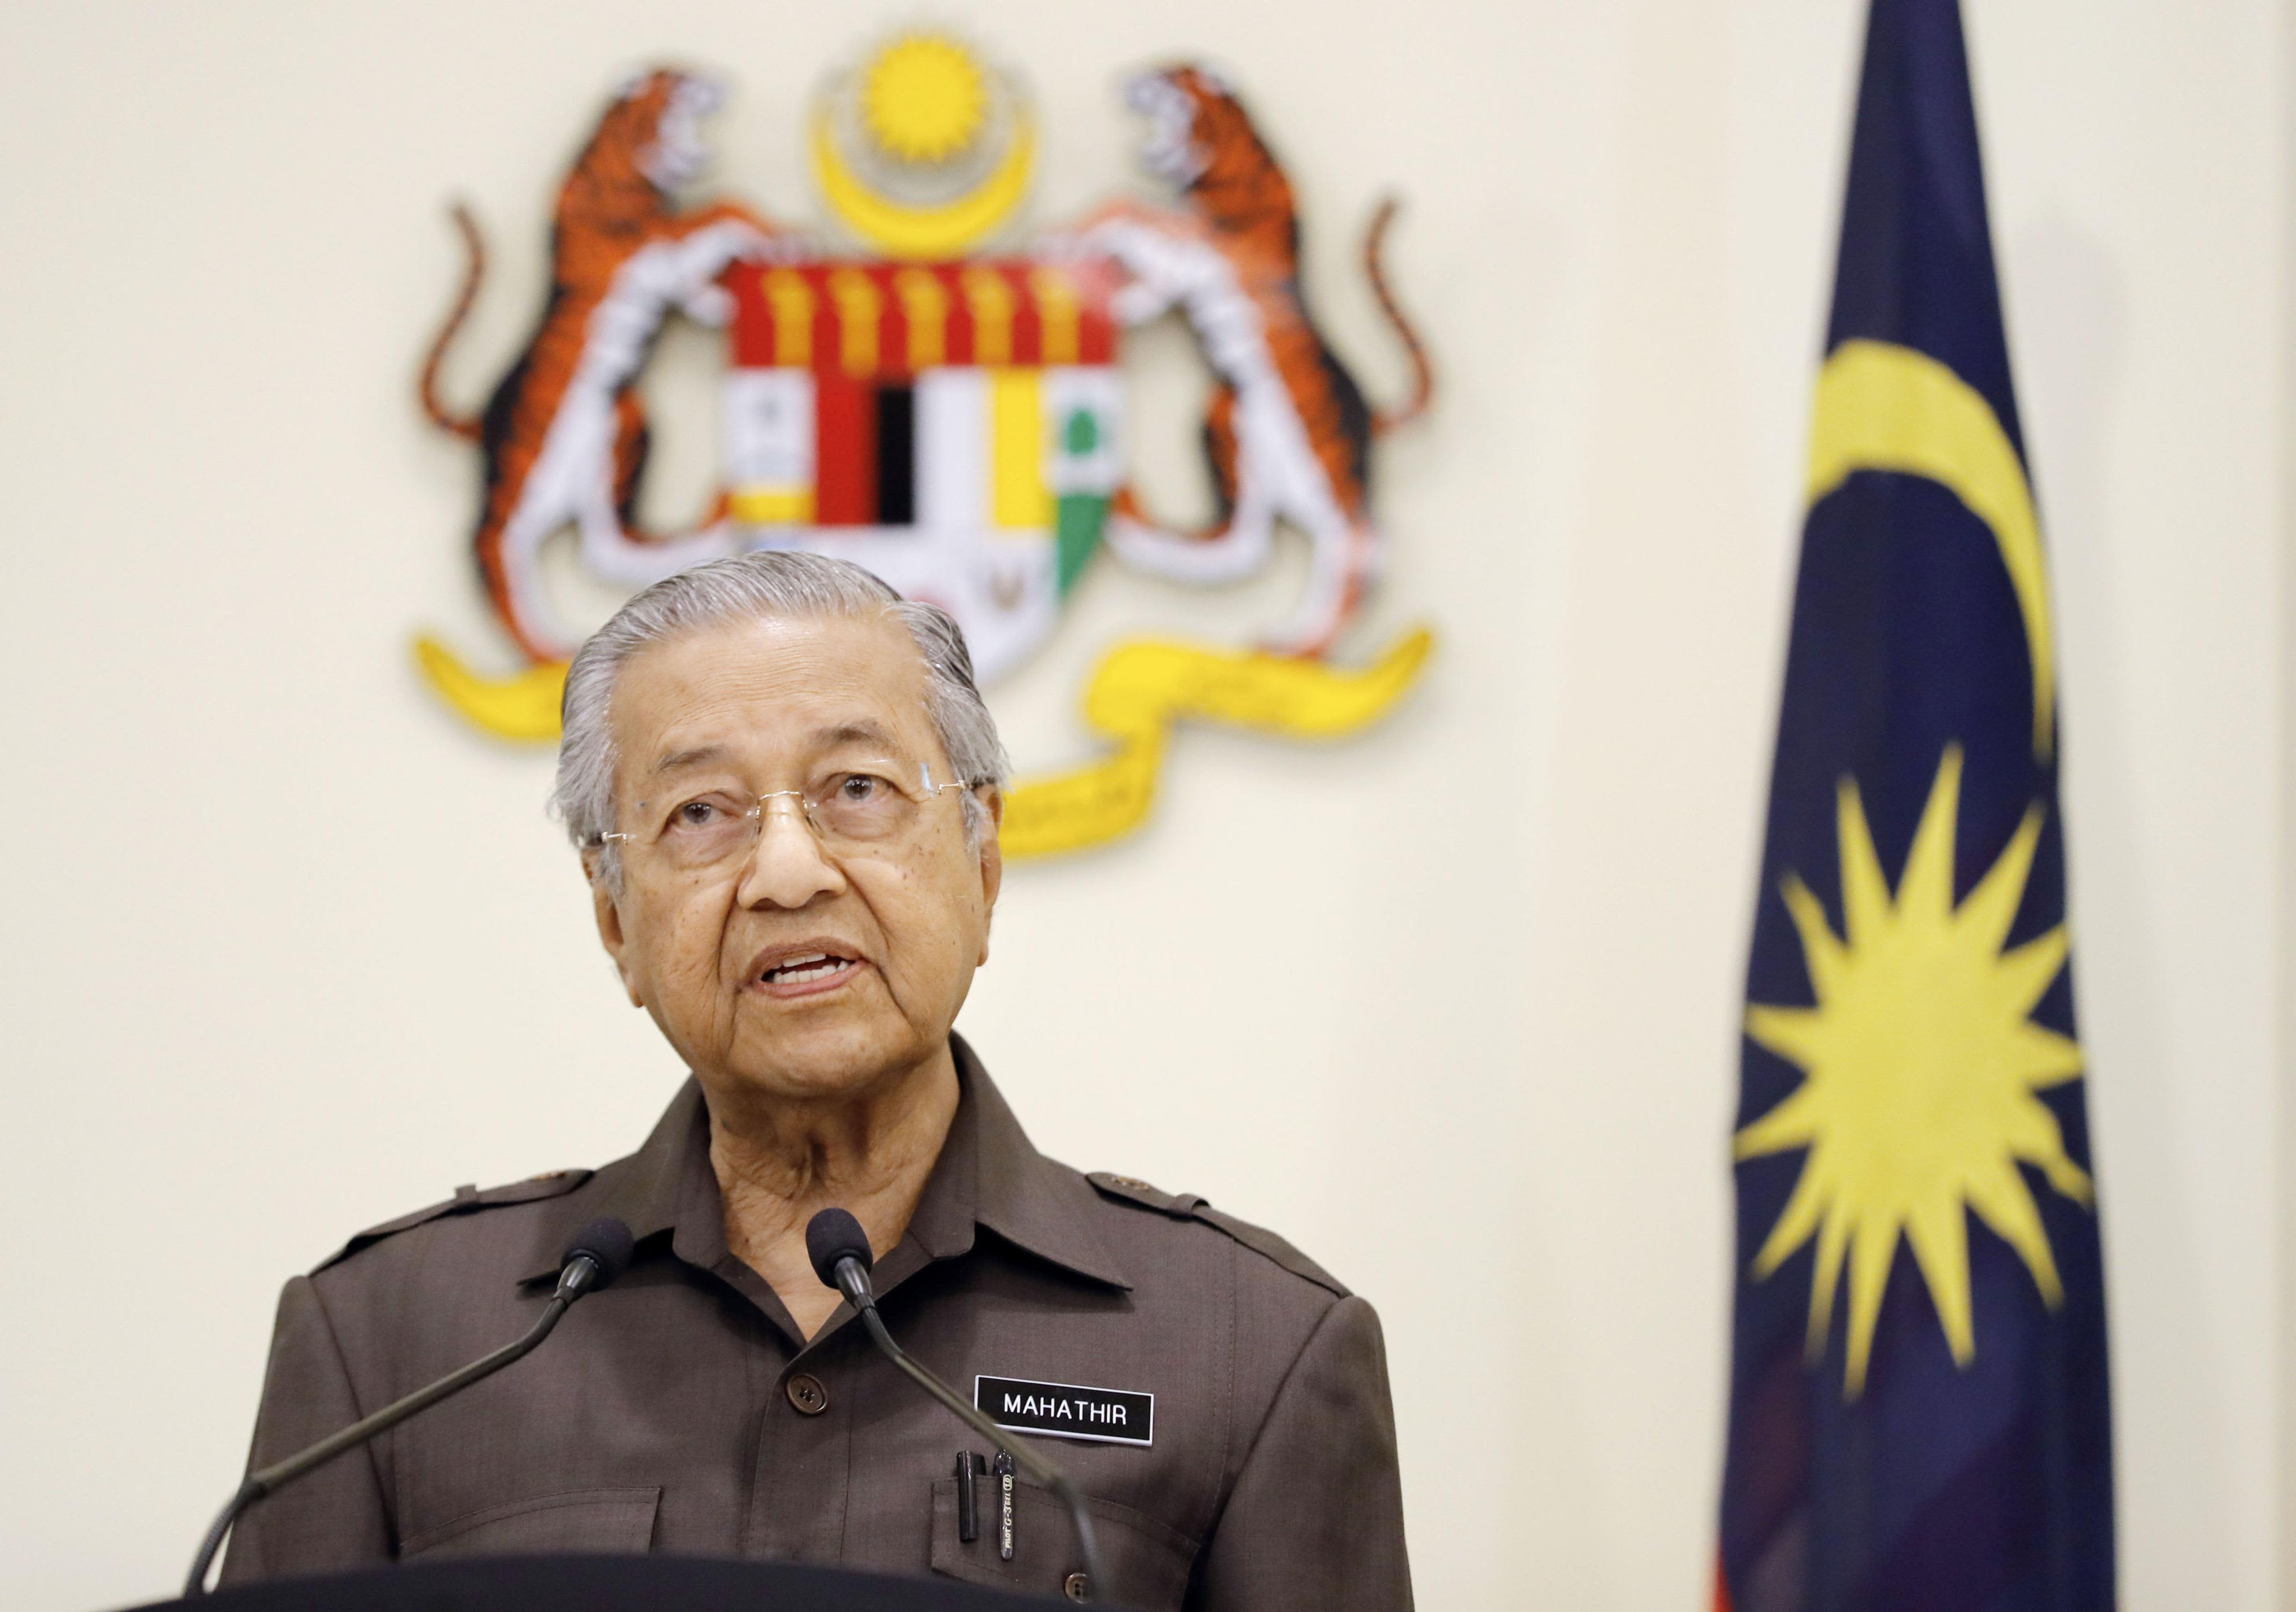 Minister malaysia resign prime BREAKING: Malaysian